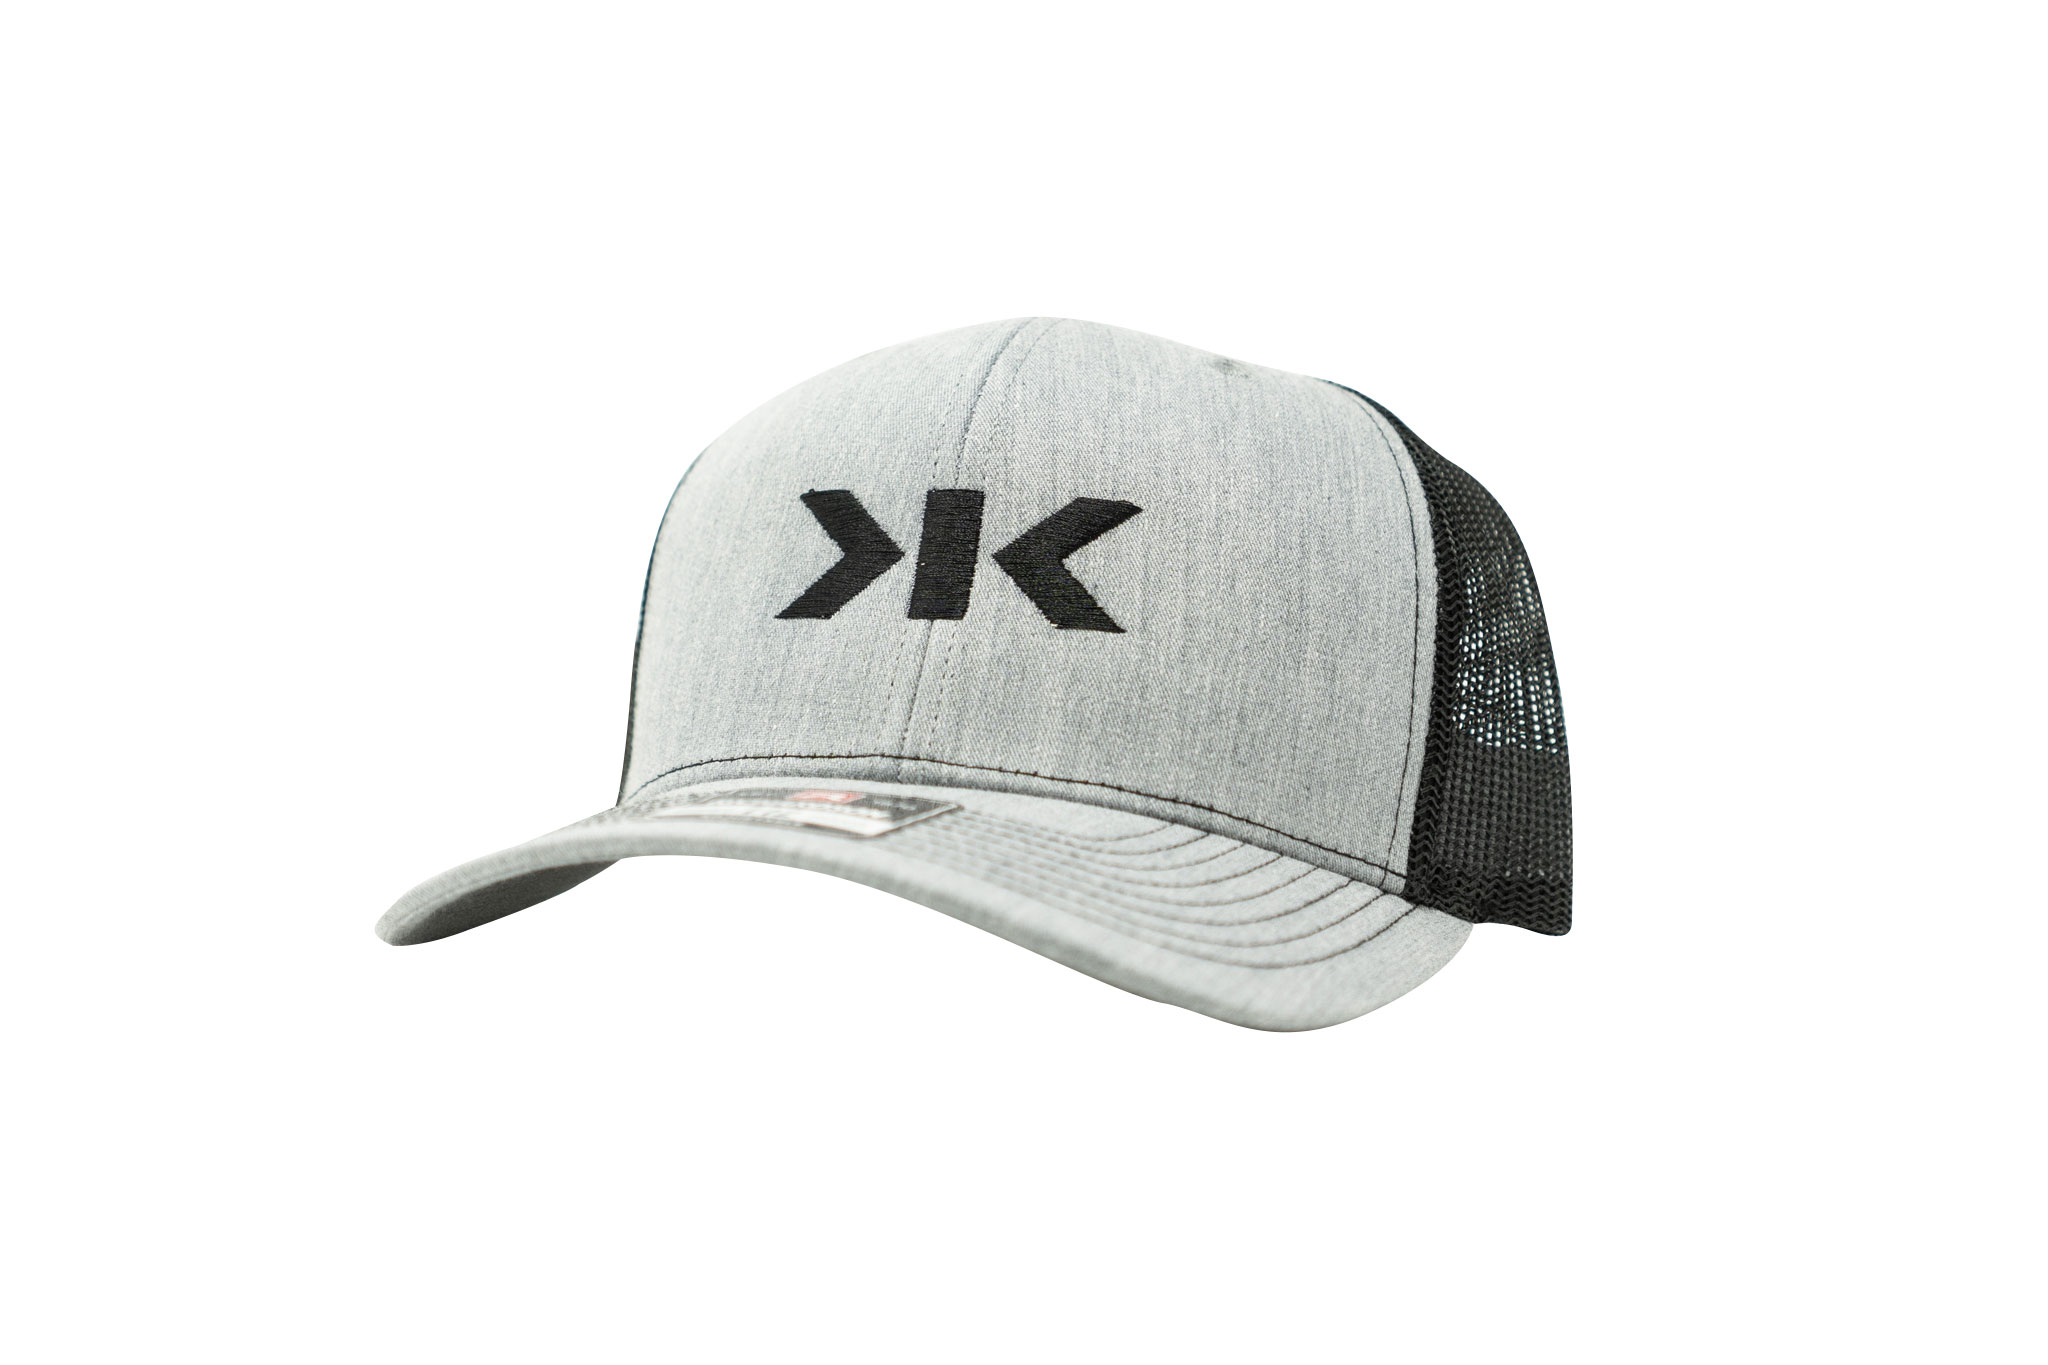 KIR AMMO LOGO TRUCKER HAT – RICHARDSON (BLACK/BLACK) Product Image